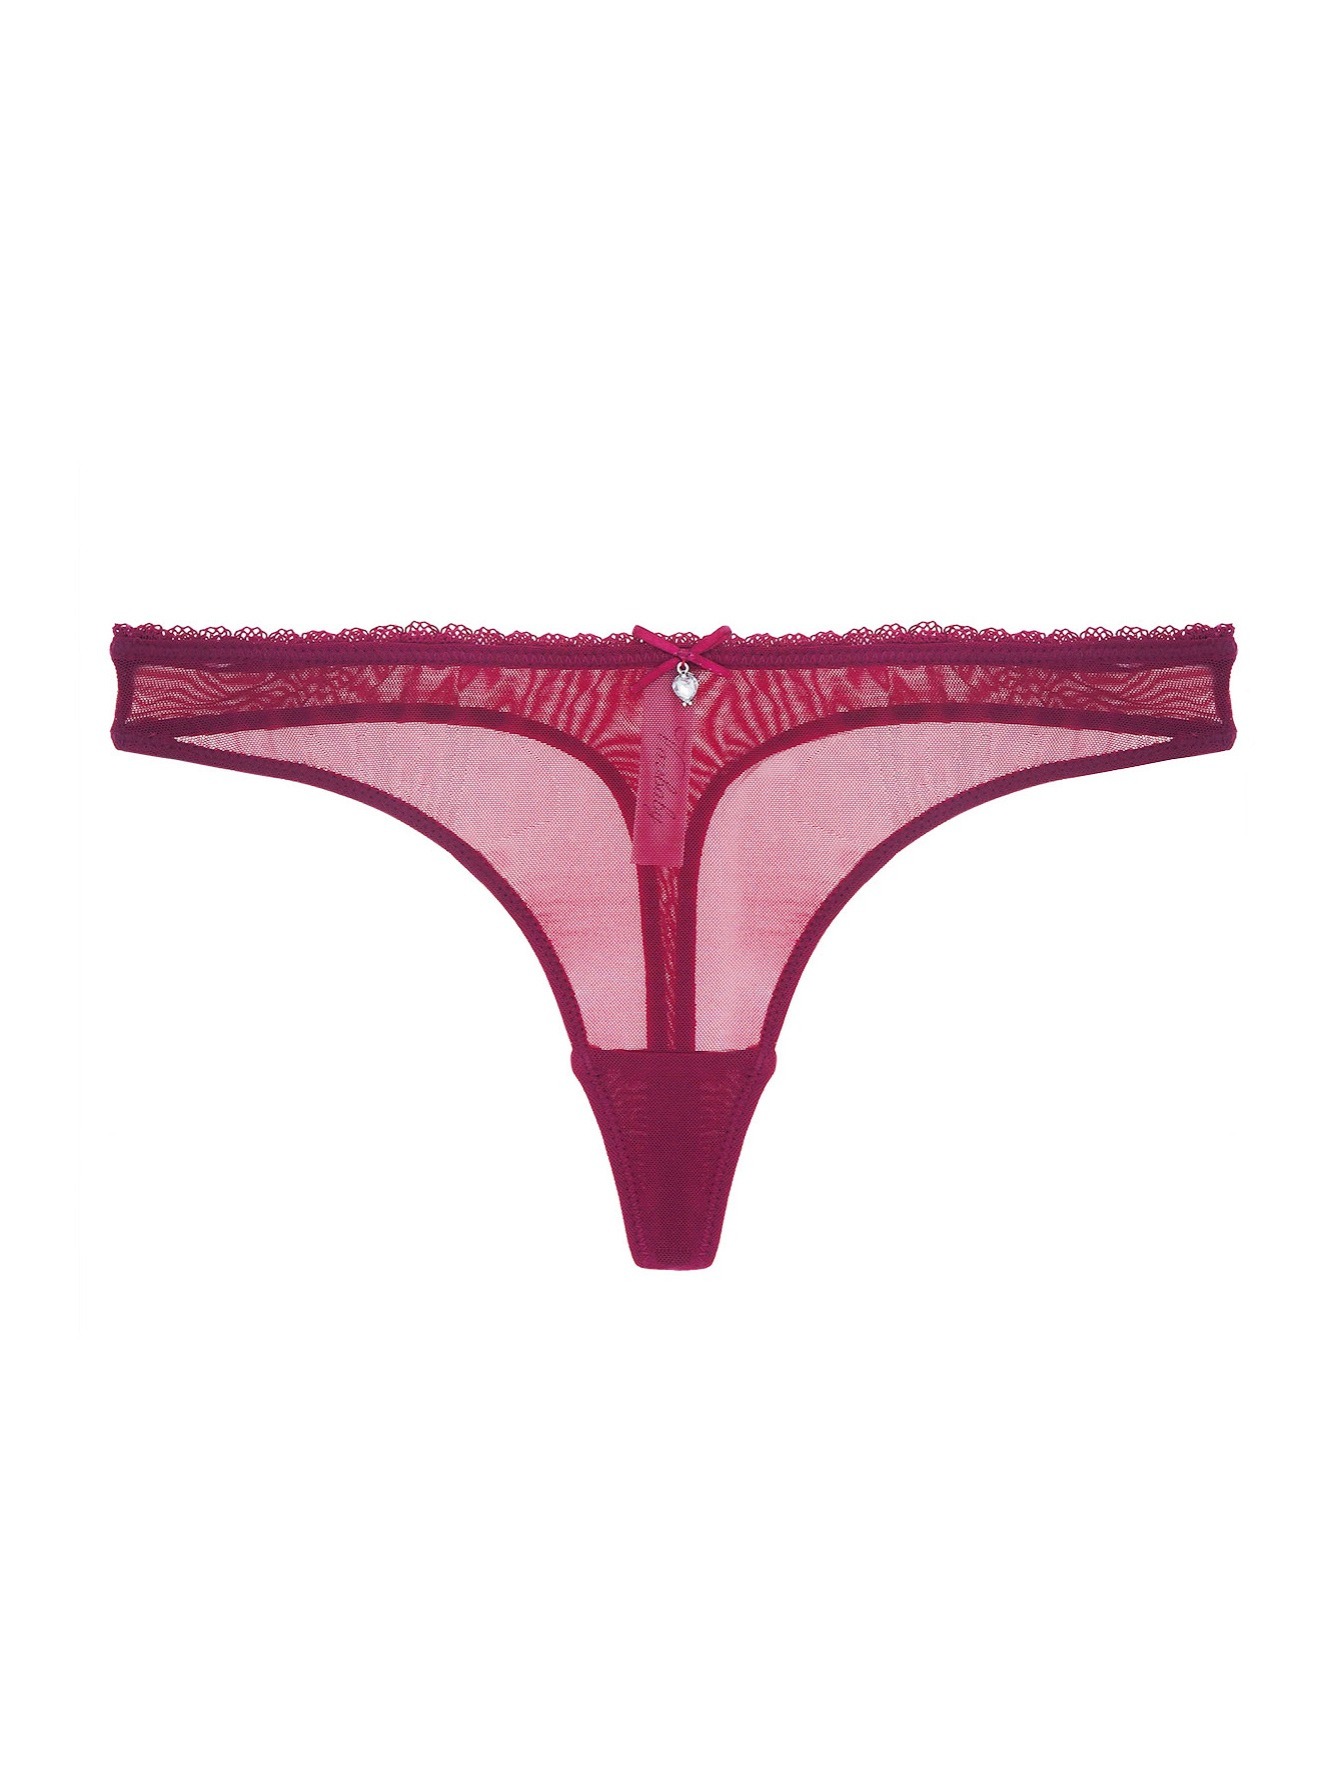 HTNBO Women Lingerie Sexy Sets Transparent Neck Sexy Underwear